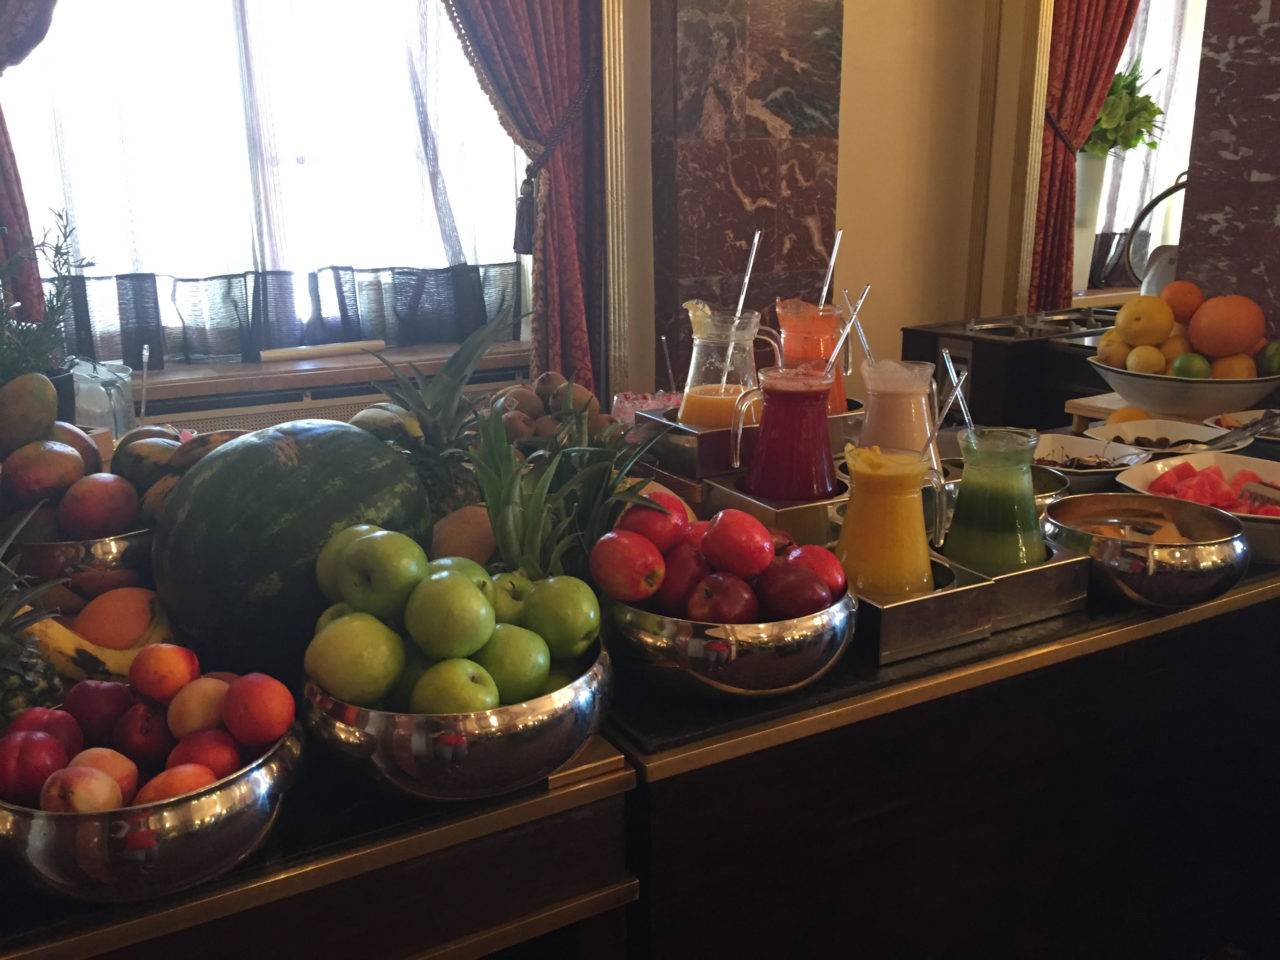 King David Hotel, Jerusalem Israel - Savor a fresh healthy breakfast